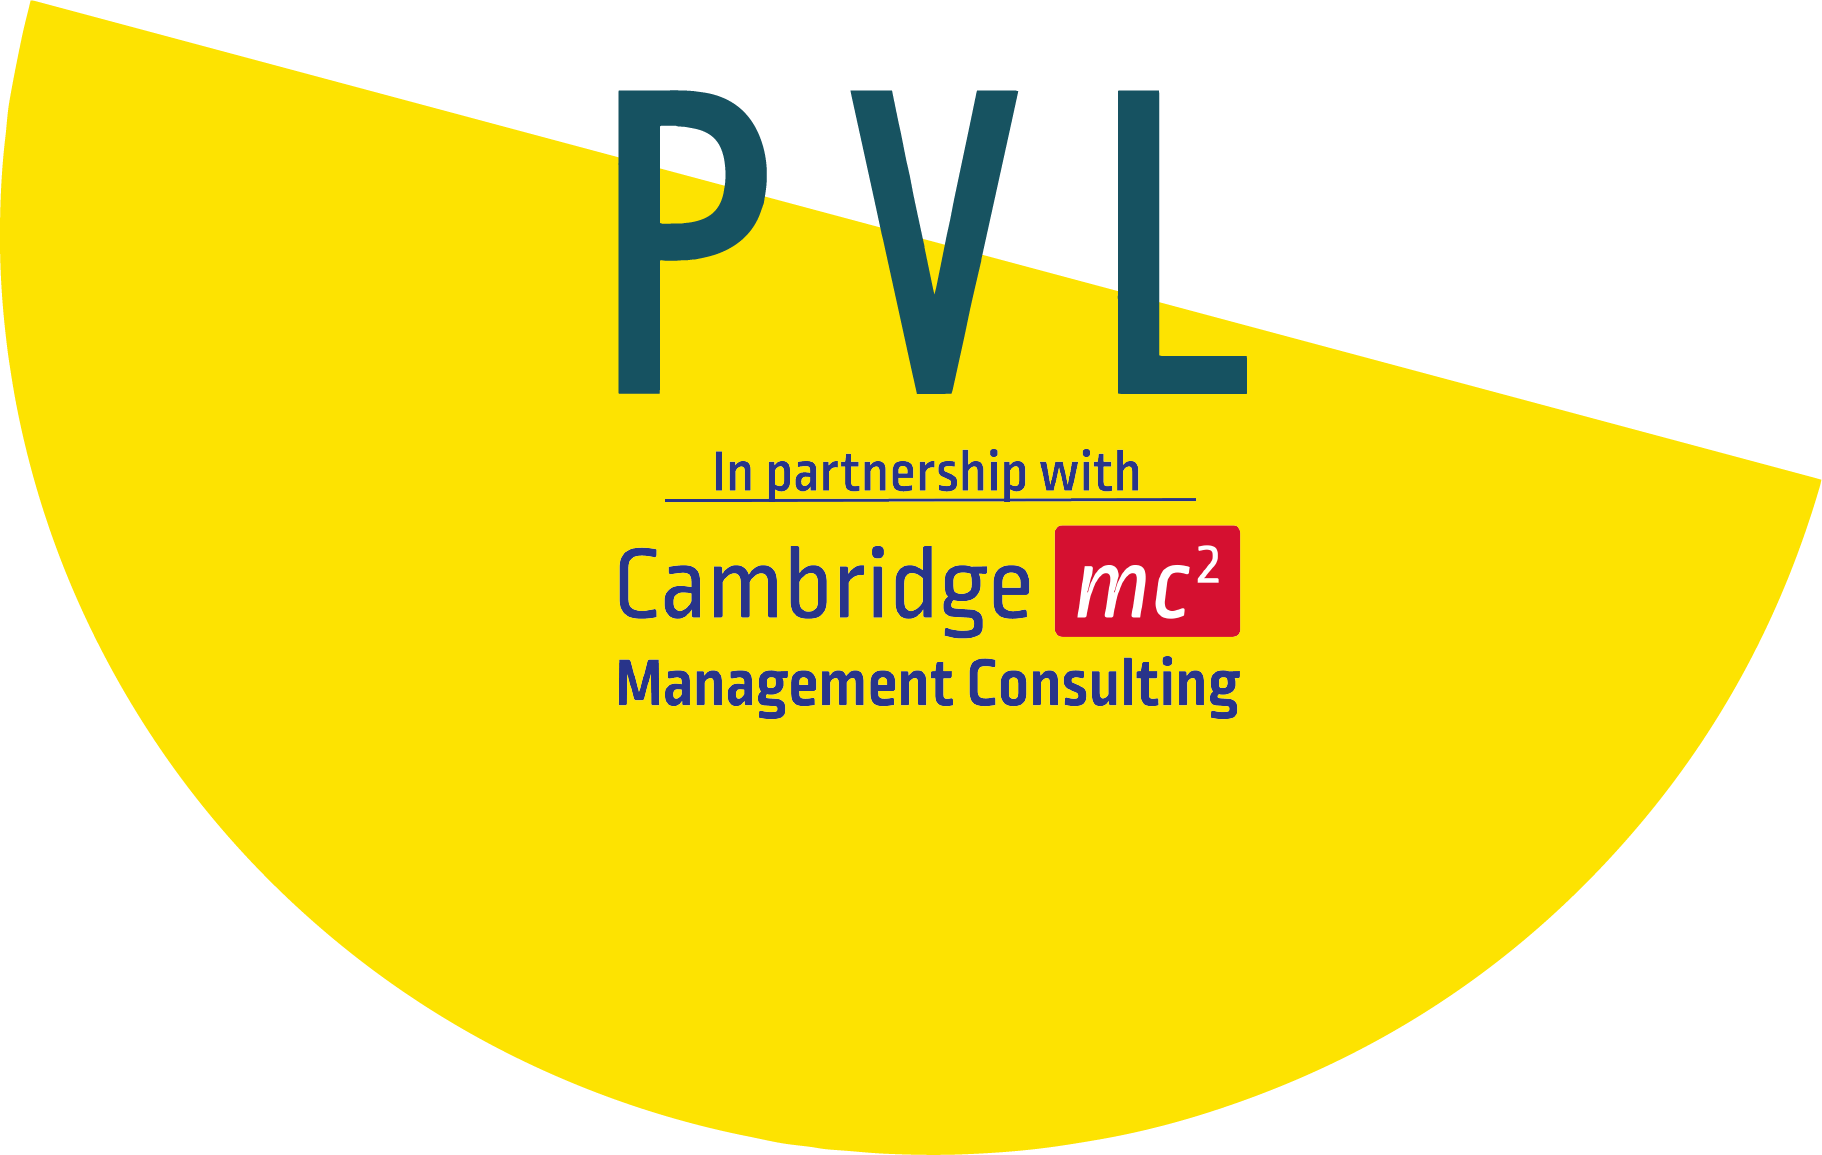 PVL and Cambridge MC partnership logo